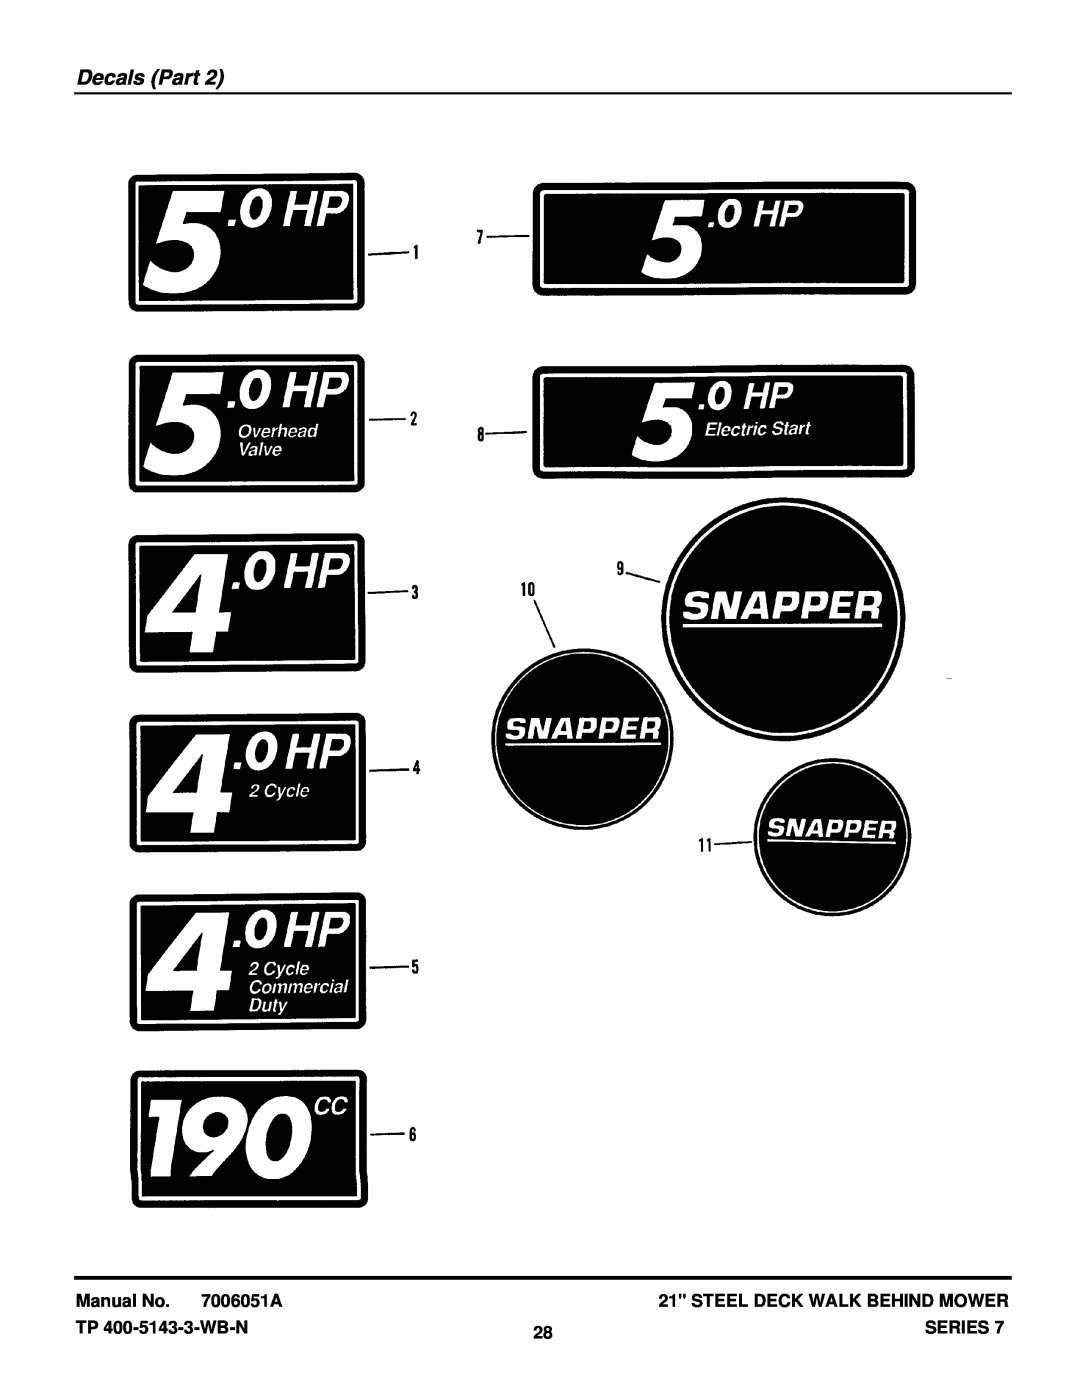 Snapper DP21407T, R21507B manual Decals Part, Manual No. 7006051A, Steel Deck Walk Behind Mower, TP 400-5143-3-WB-N, Series 